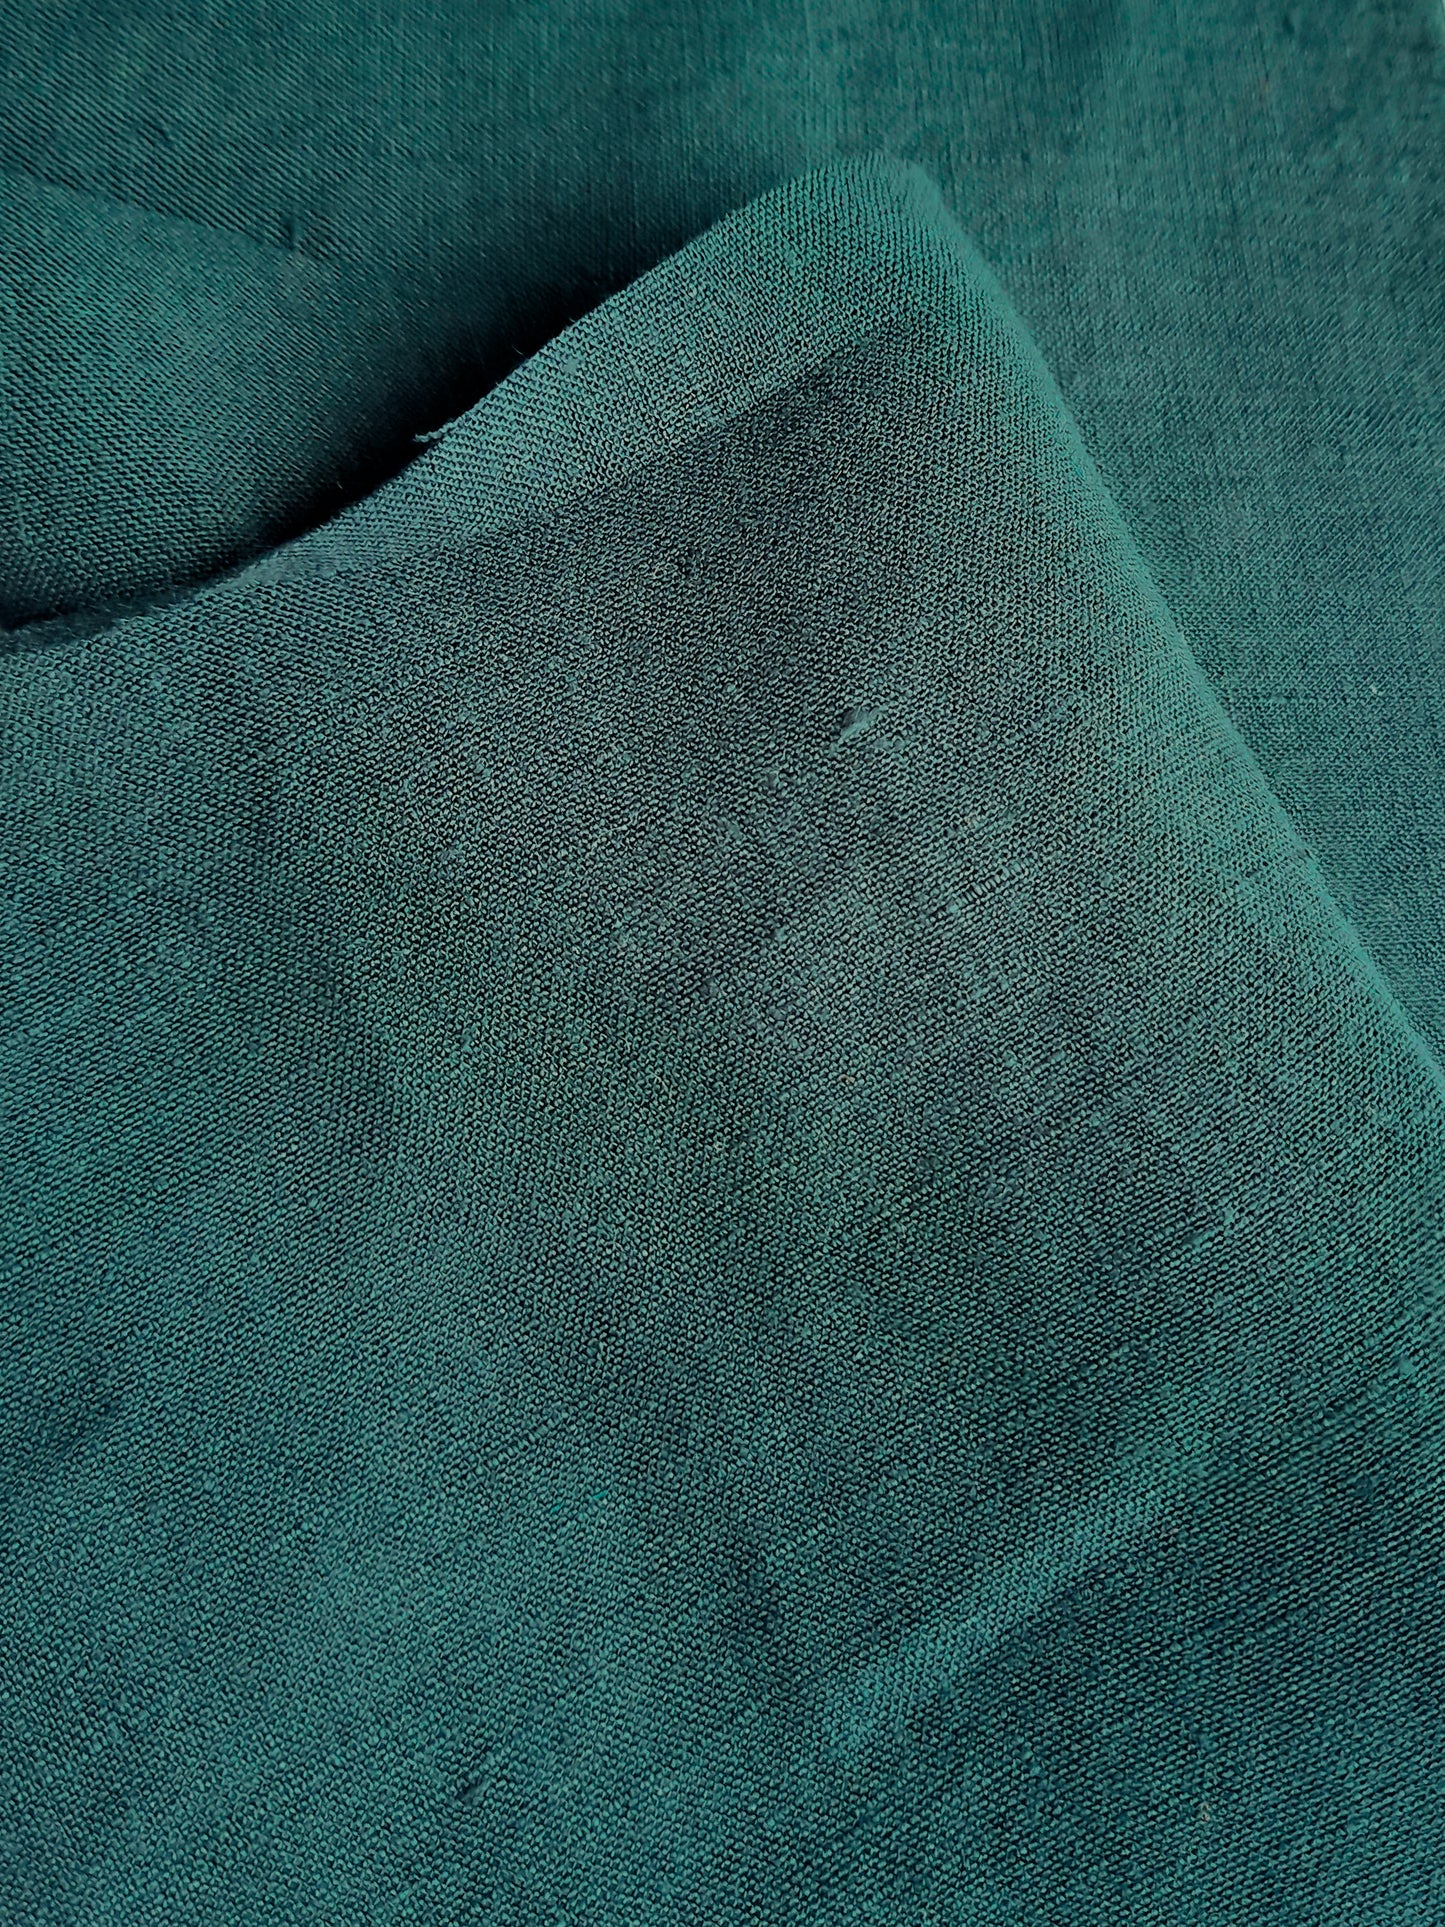 Pre-made Izzy Dress (greenstone linen) - size M